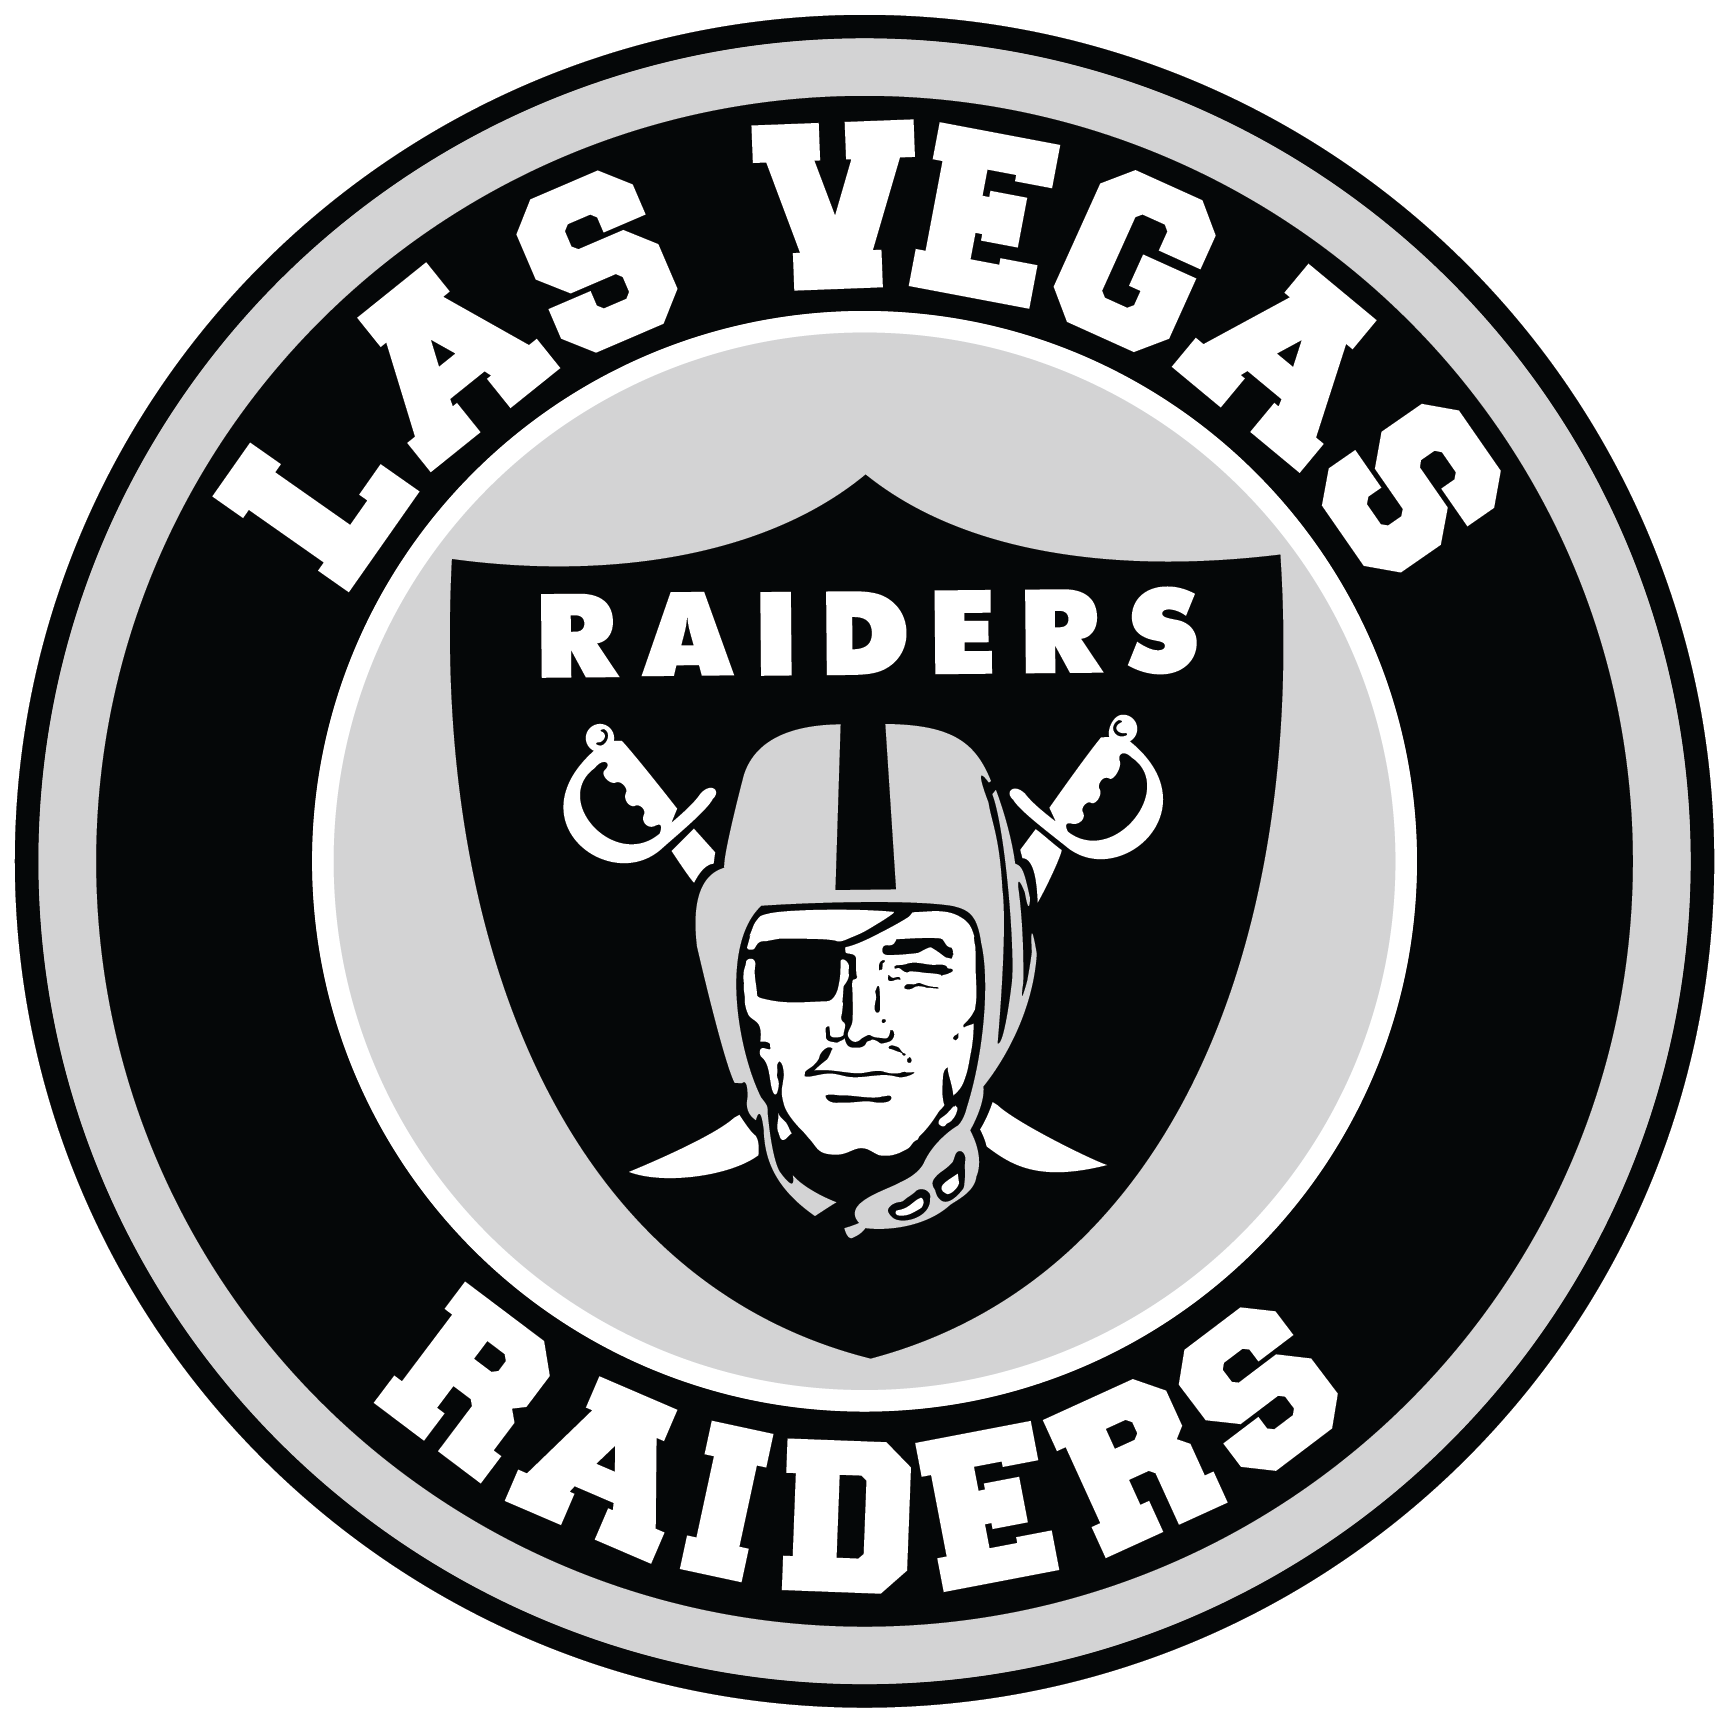 Las Vegas Raiders Background PNG Image